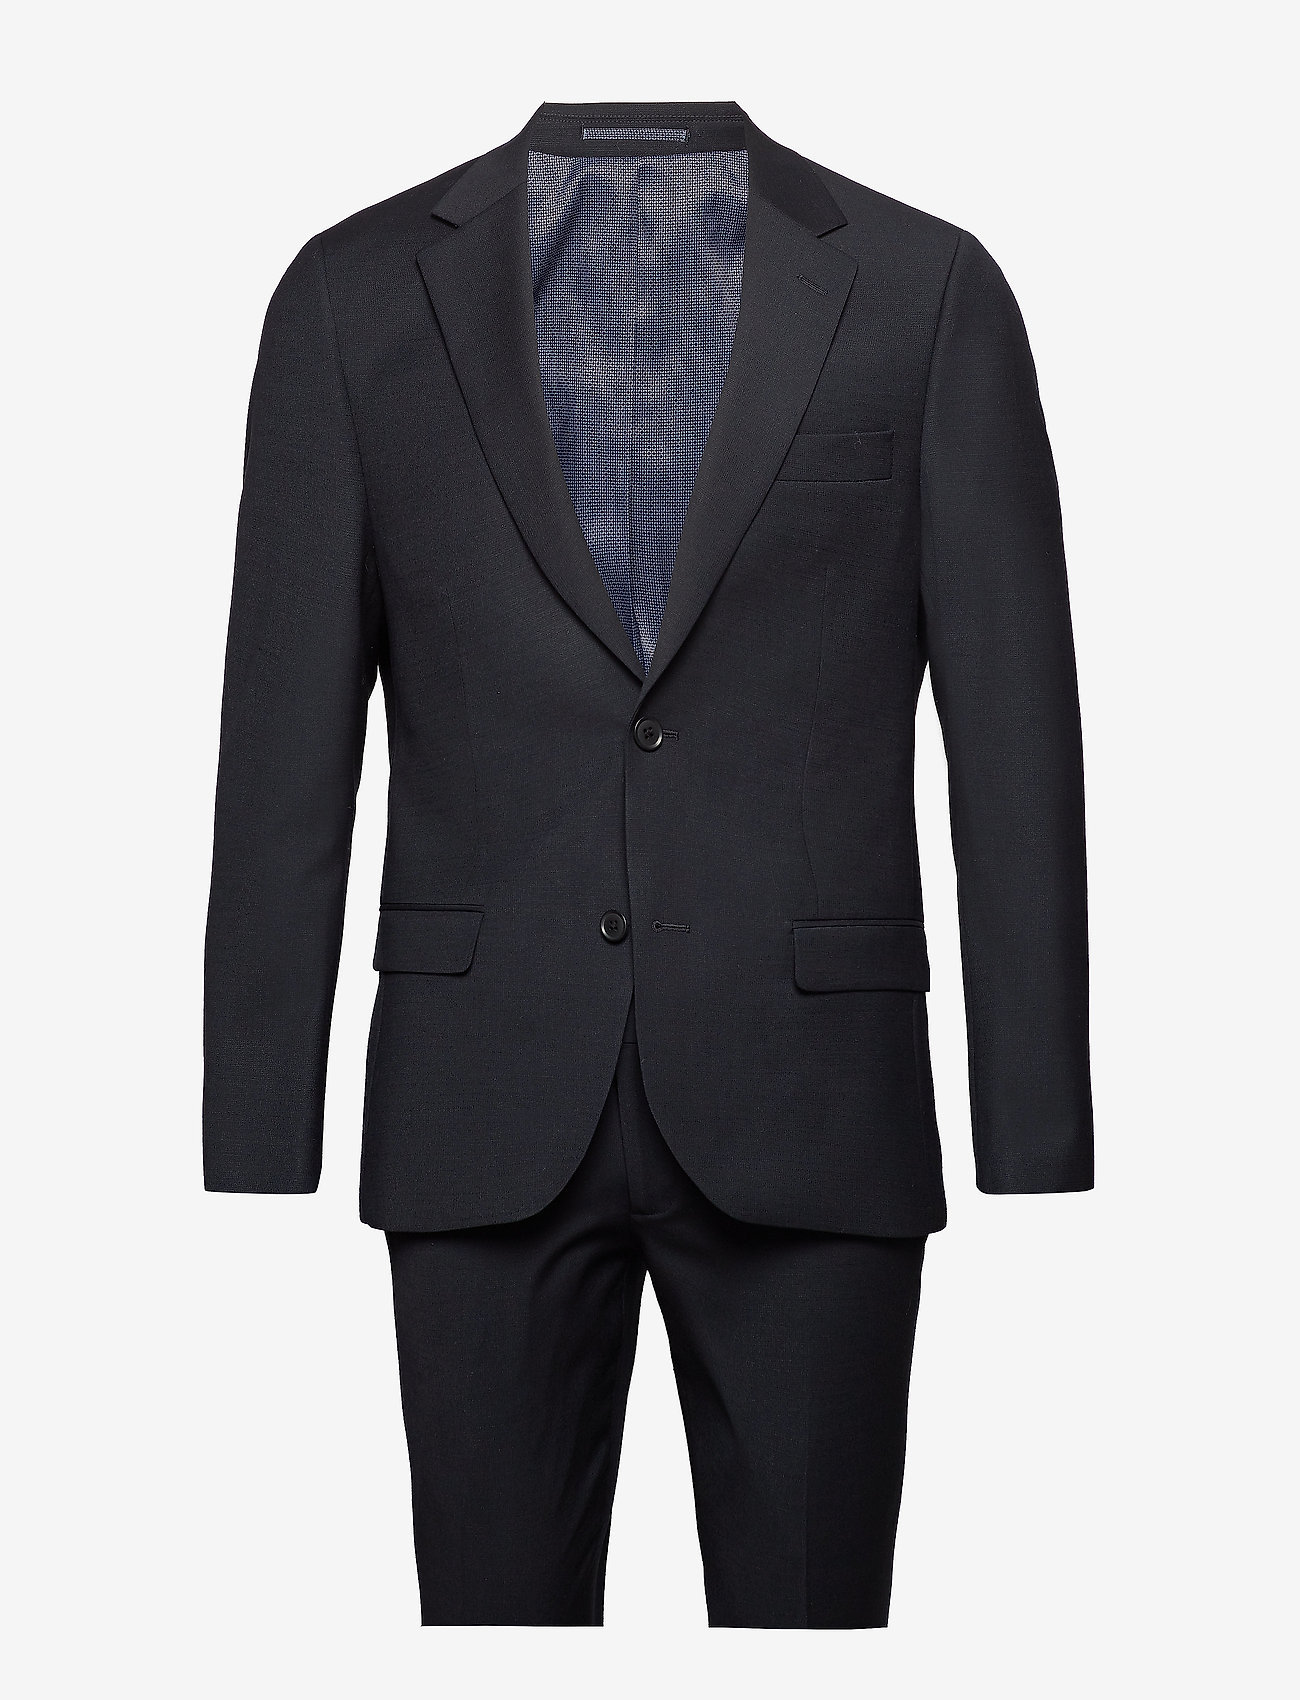 Bruun & Stengade - Hardmann, Suit Set - dobbeltradede jakkesæt - black - 0